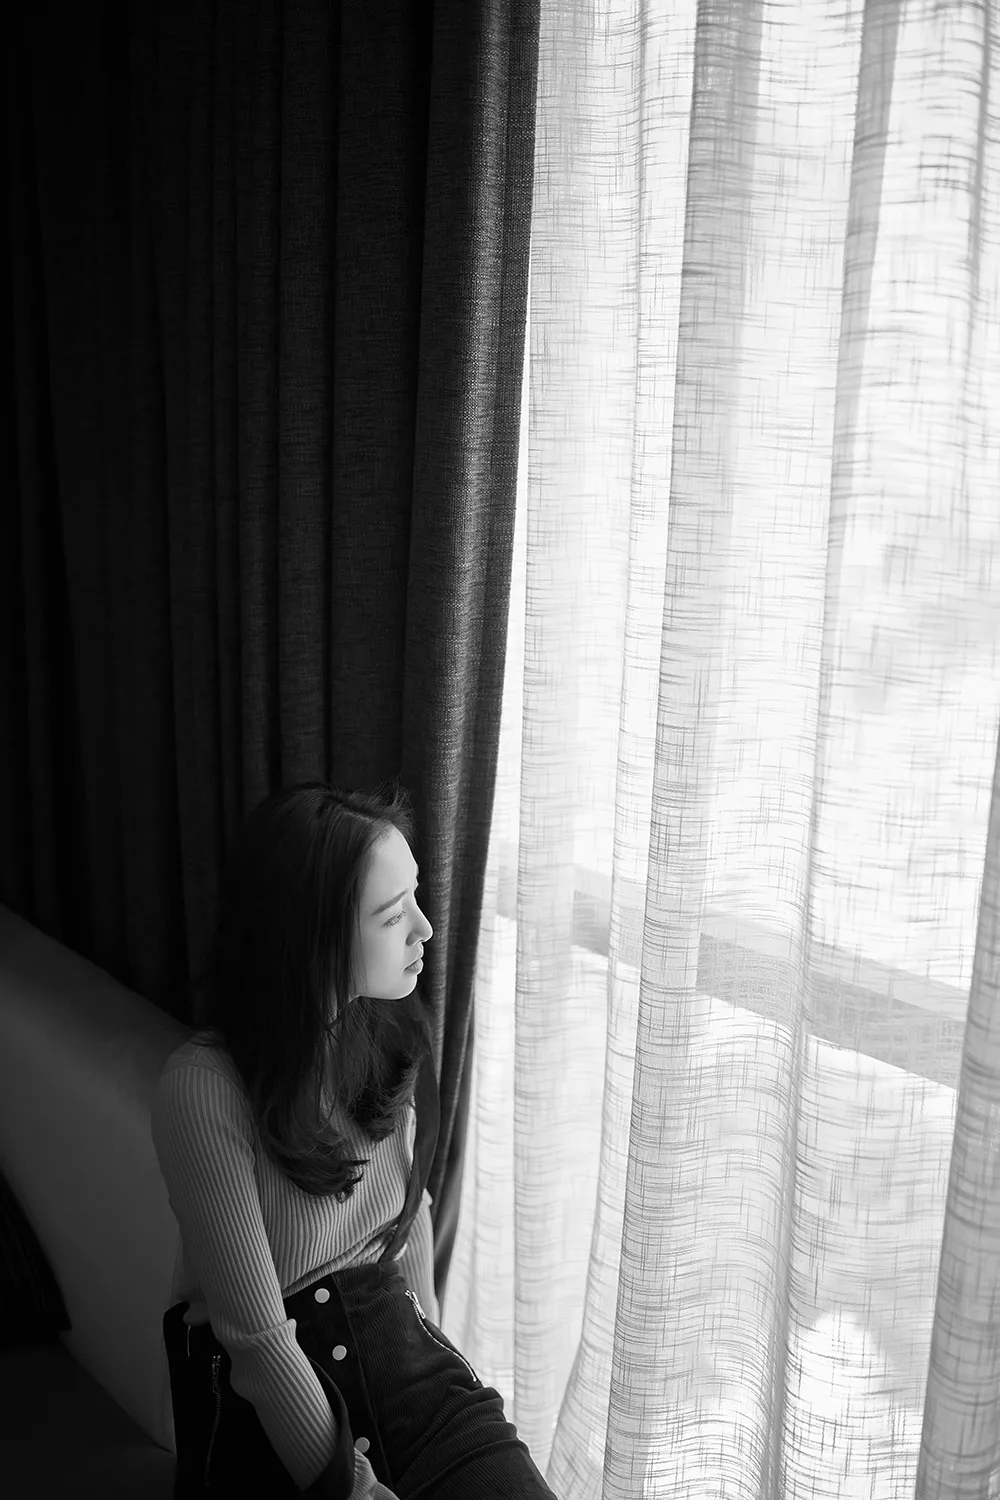 Wu Qian (actress) looks out the window. JPG